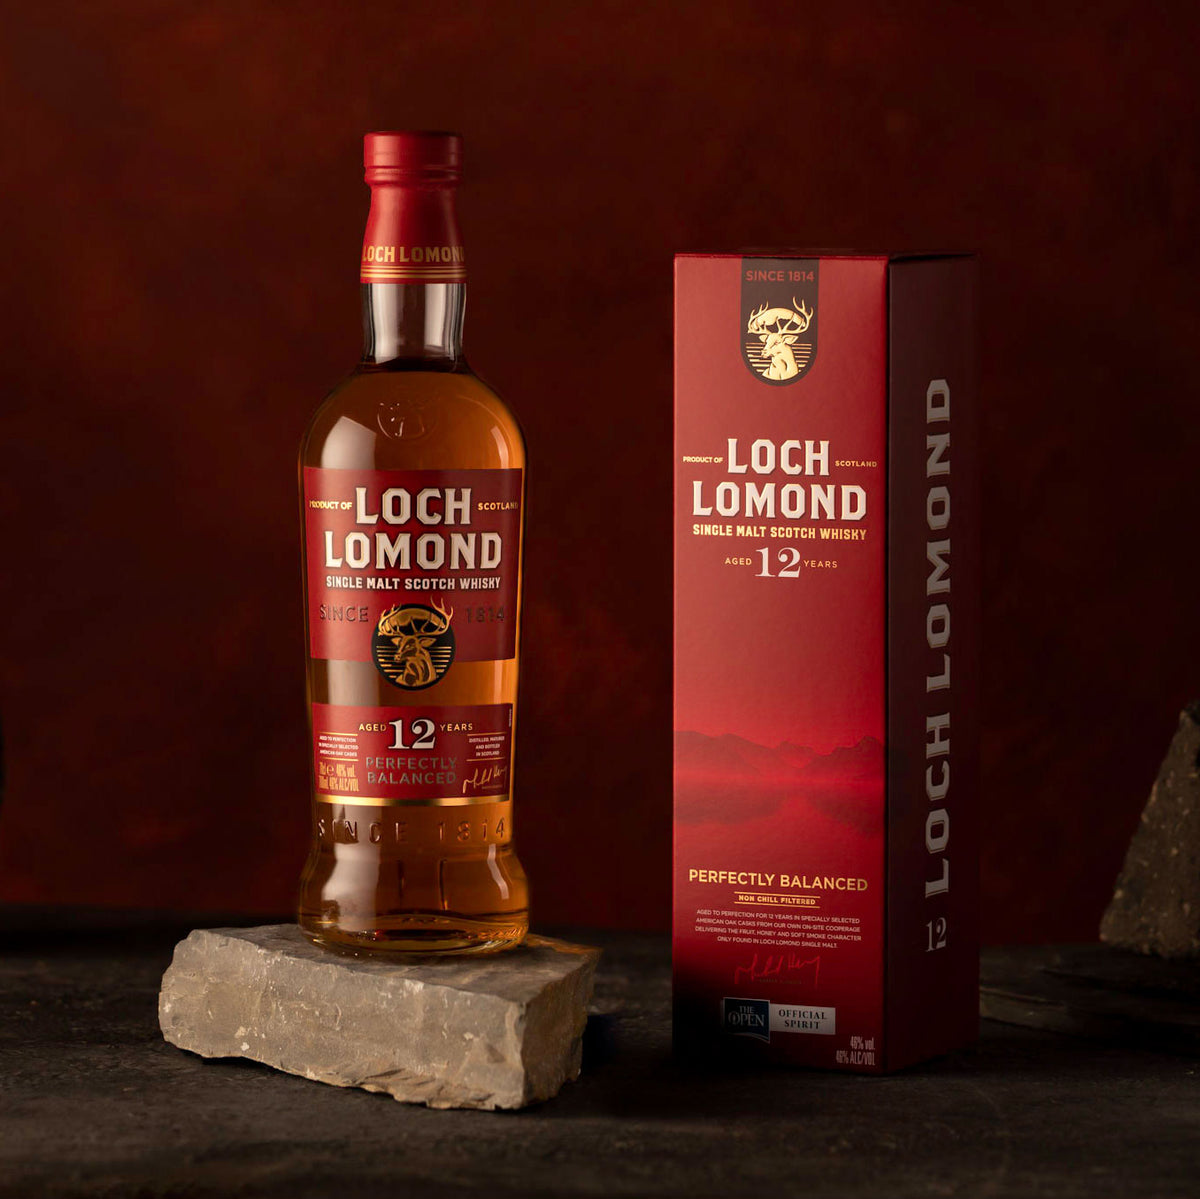 Loch Lomond 12 Year old single malt whisky